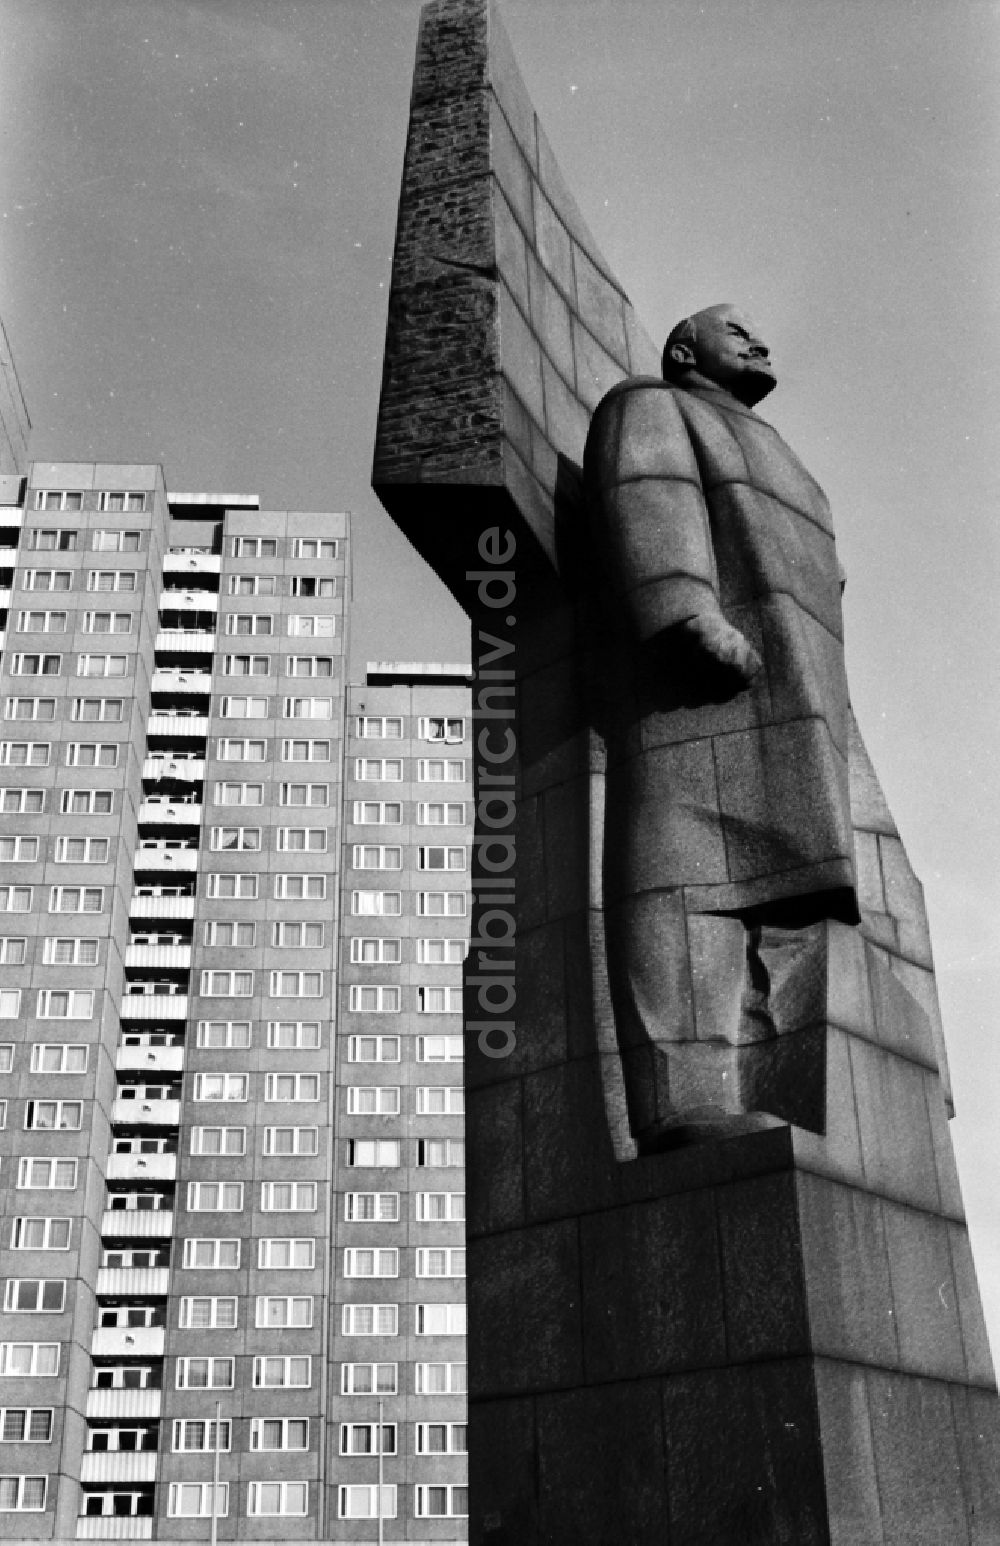 DDR-Bildarchiv: Berlin - Skulptur des Lenindenkmales am Leninplatz in Berlin in der DDR